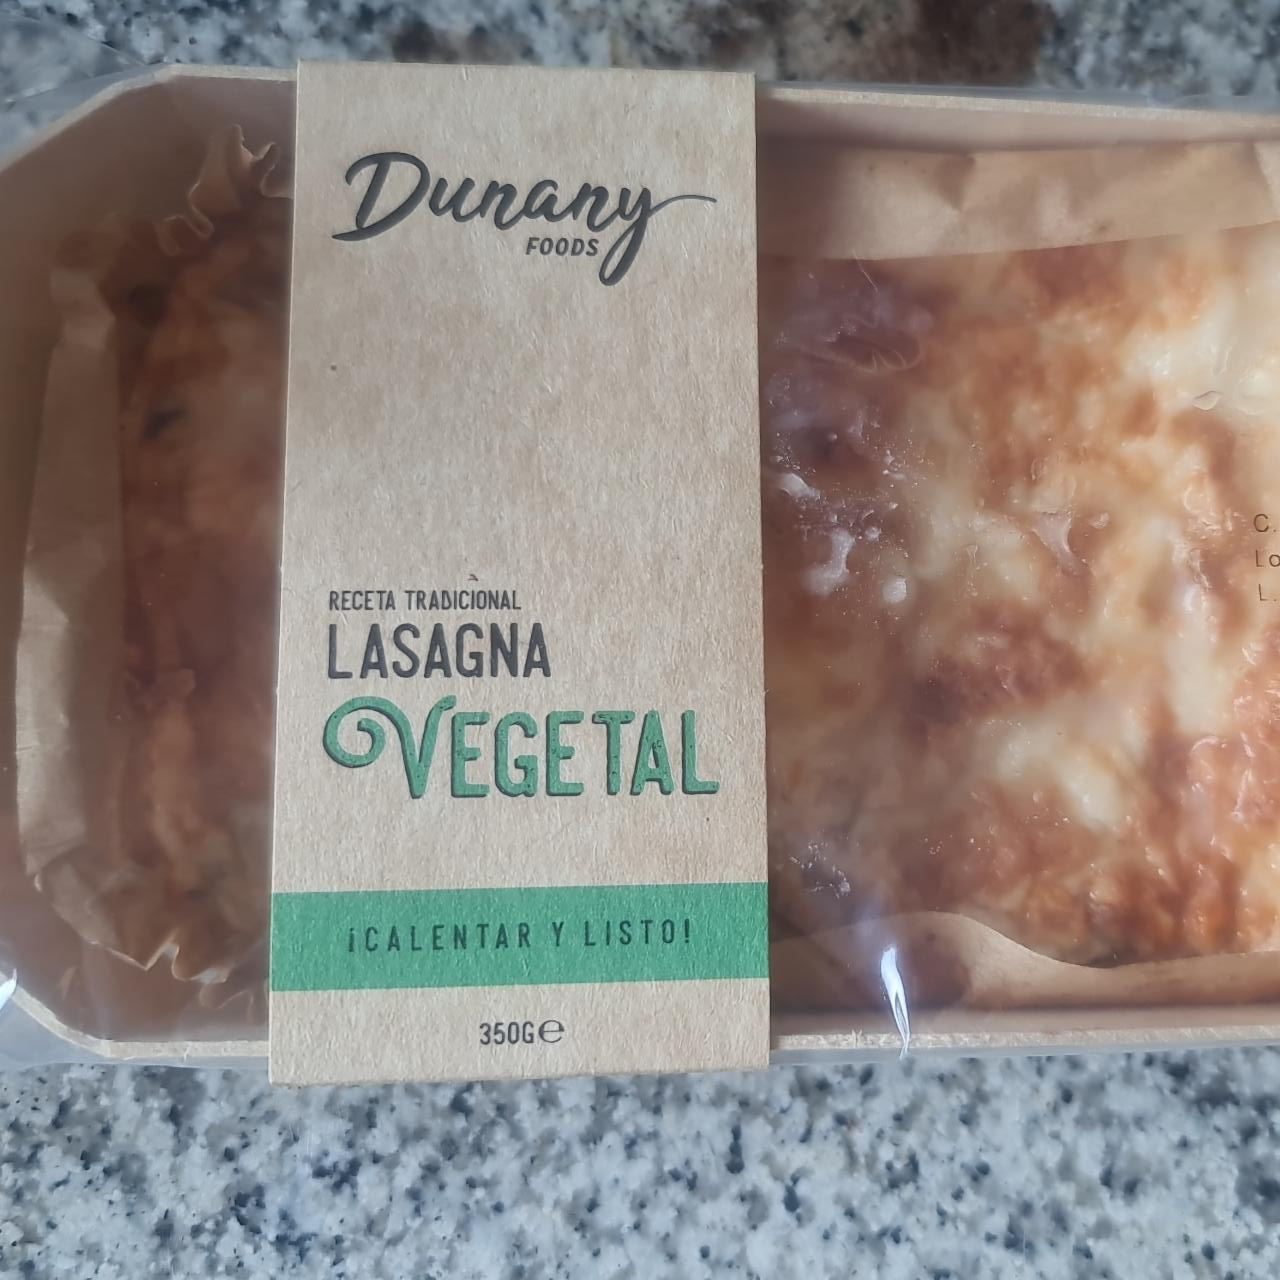 Фото - Lasagna vegetal Dunany foods